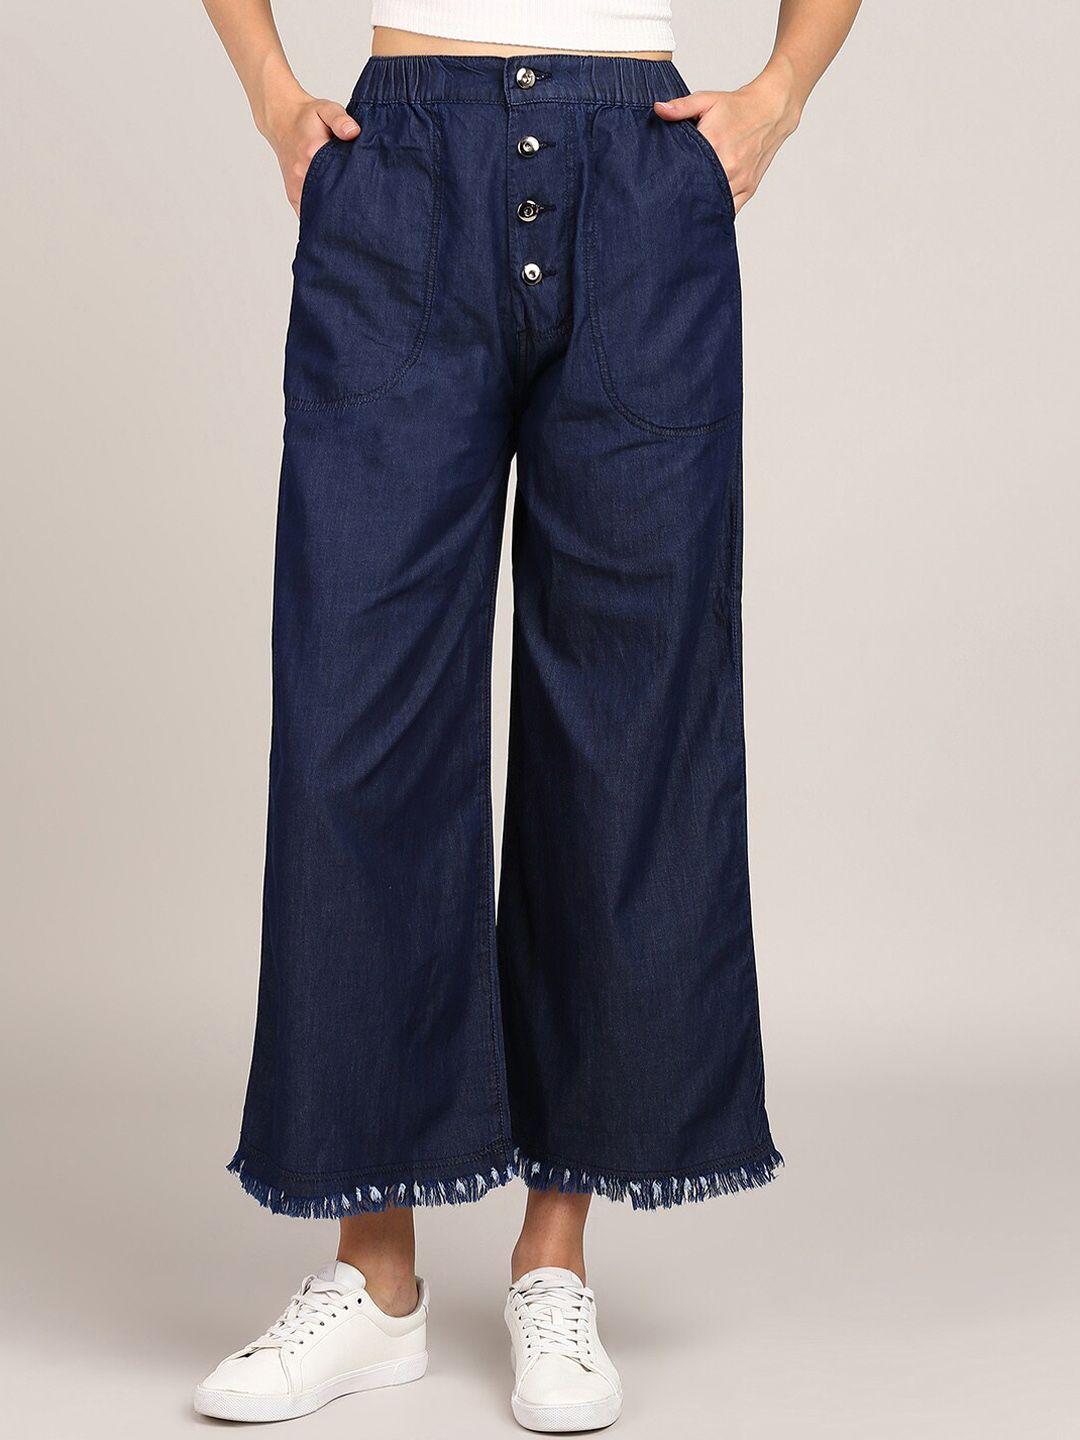 dressberry women blue jean flared clean look low-rise cotton jeans